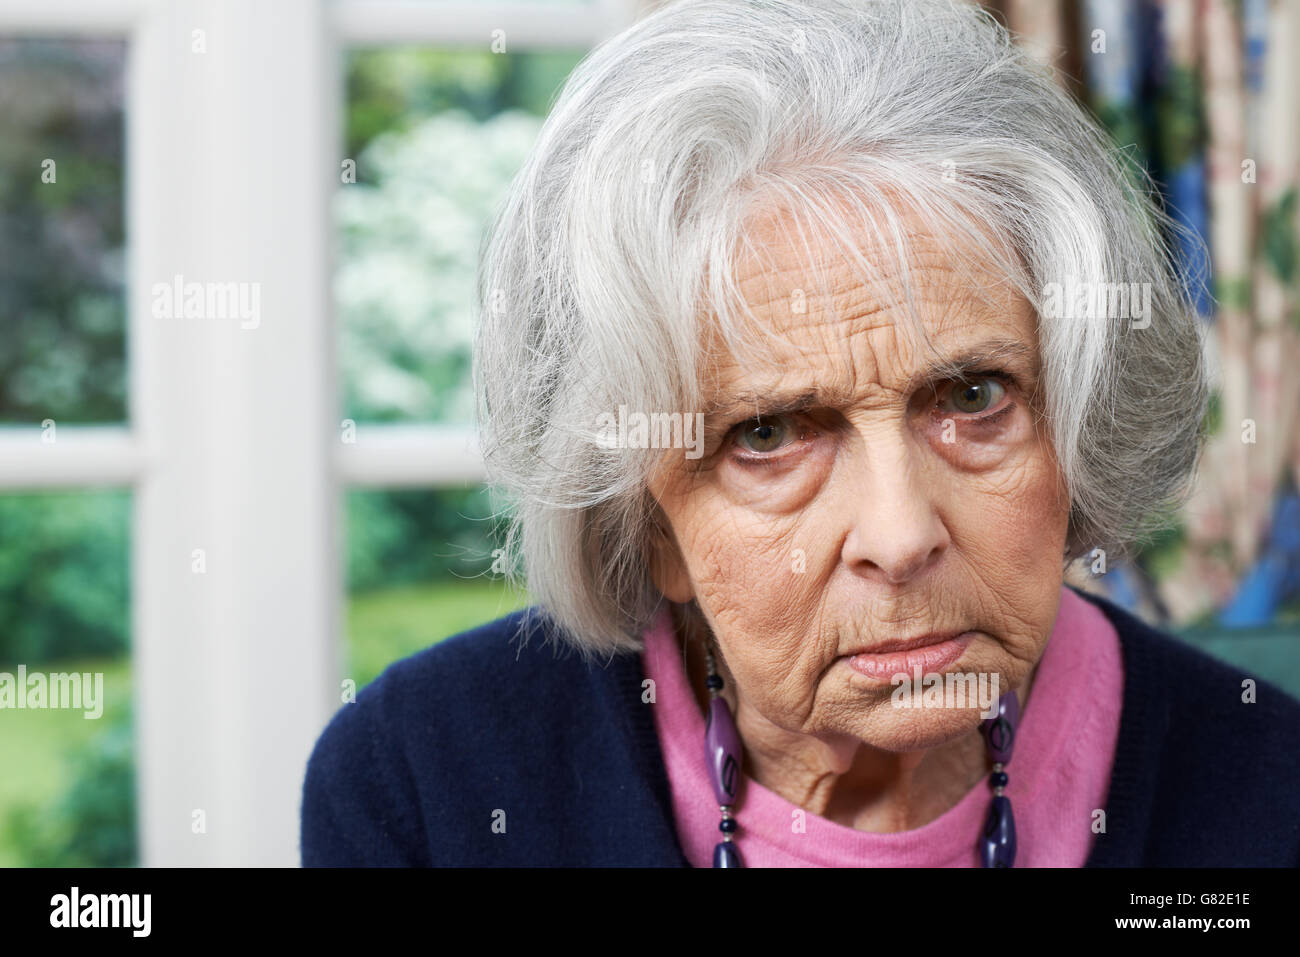 cranky senior citizens